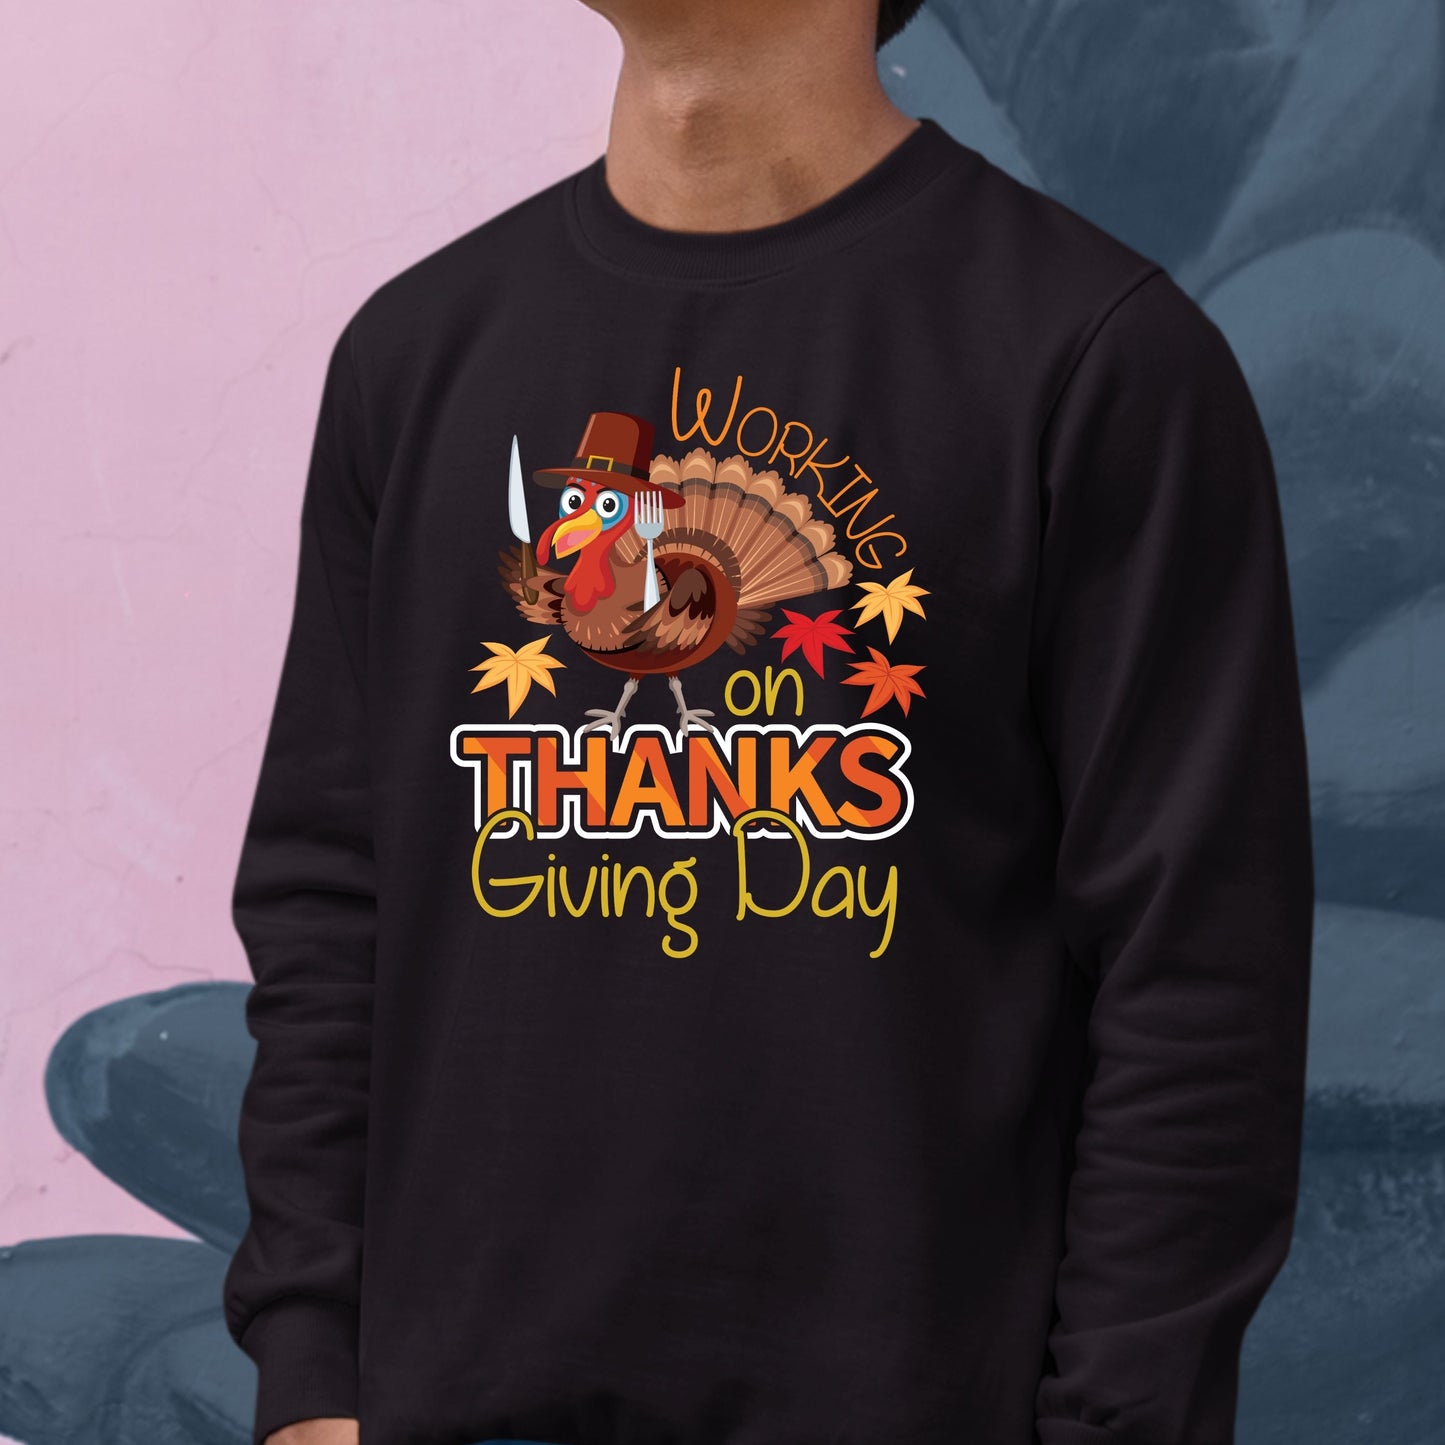 Working on Thanksgiving Sweatshirt, Thanksgiving Sweatshirt, Thanksgiving Sweater for Kid, Thanksgiving Gift, Cute Thanksgiving